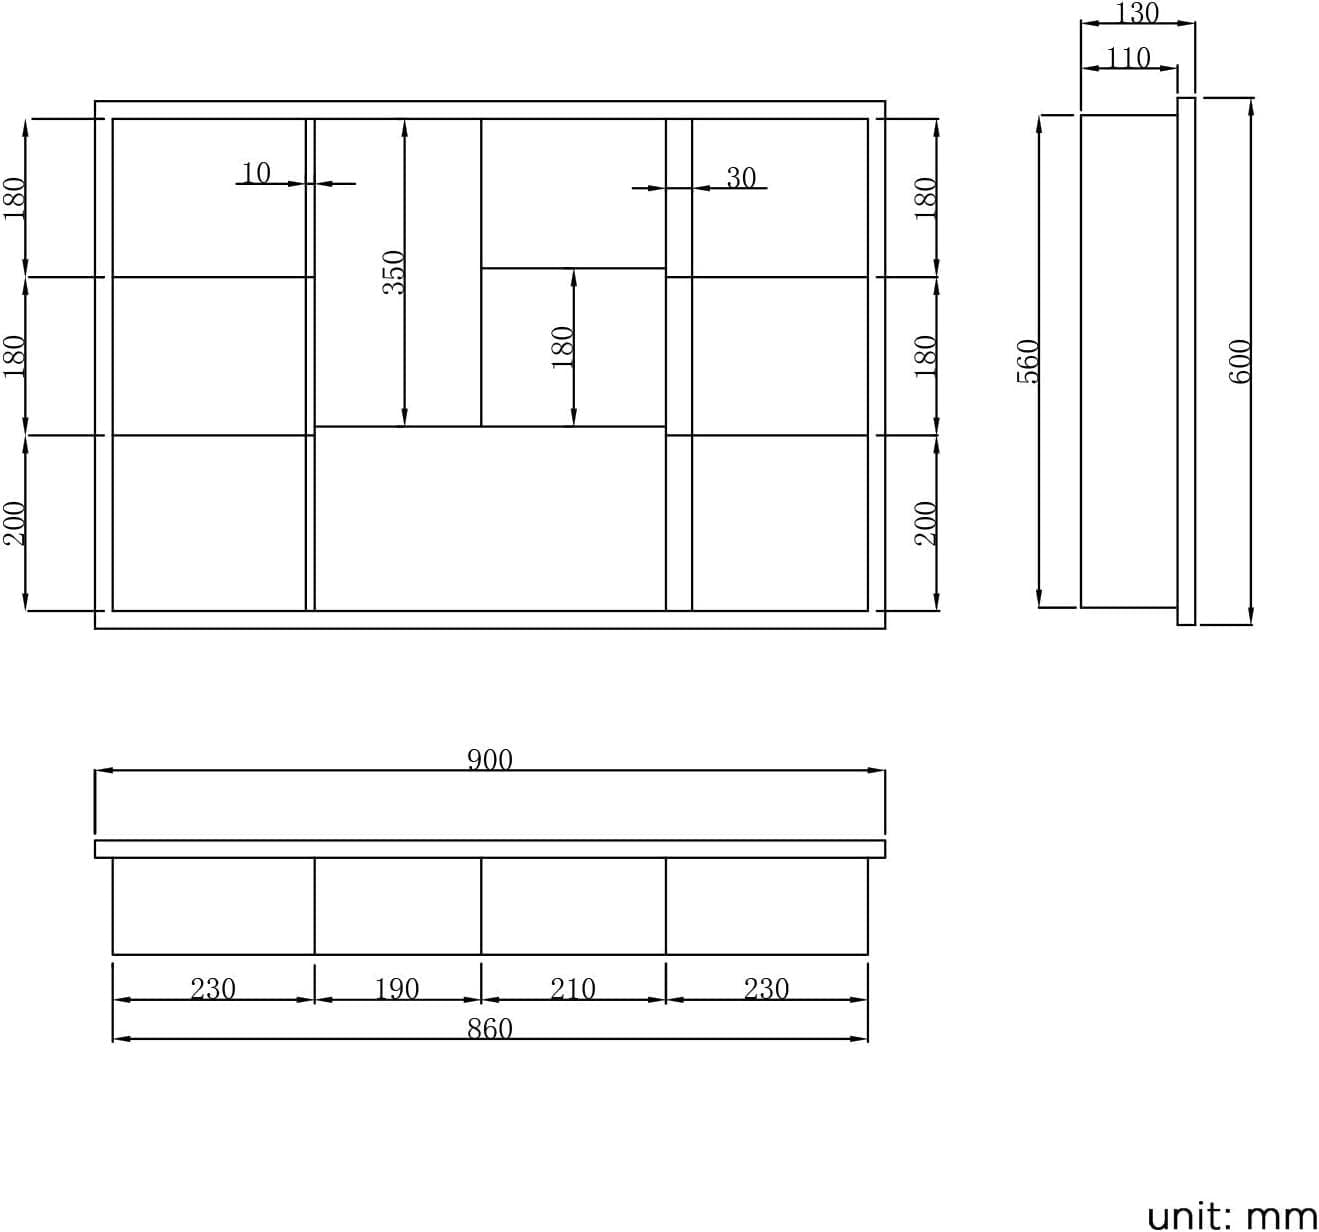 iBathUK Furniture > Mirrors Mirror Cabinet 3 Doors Storage Unit Stainless Steel 600 x 900mm